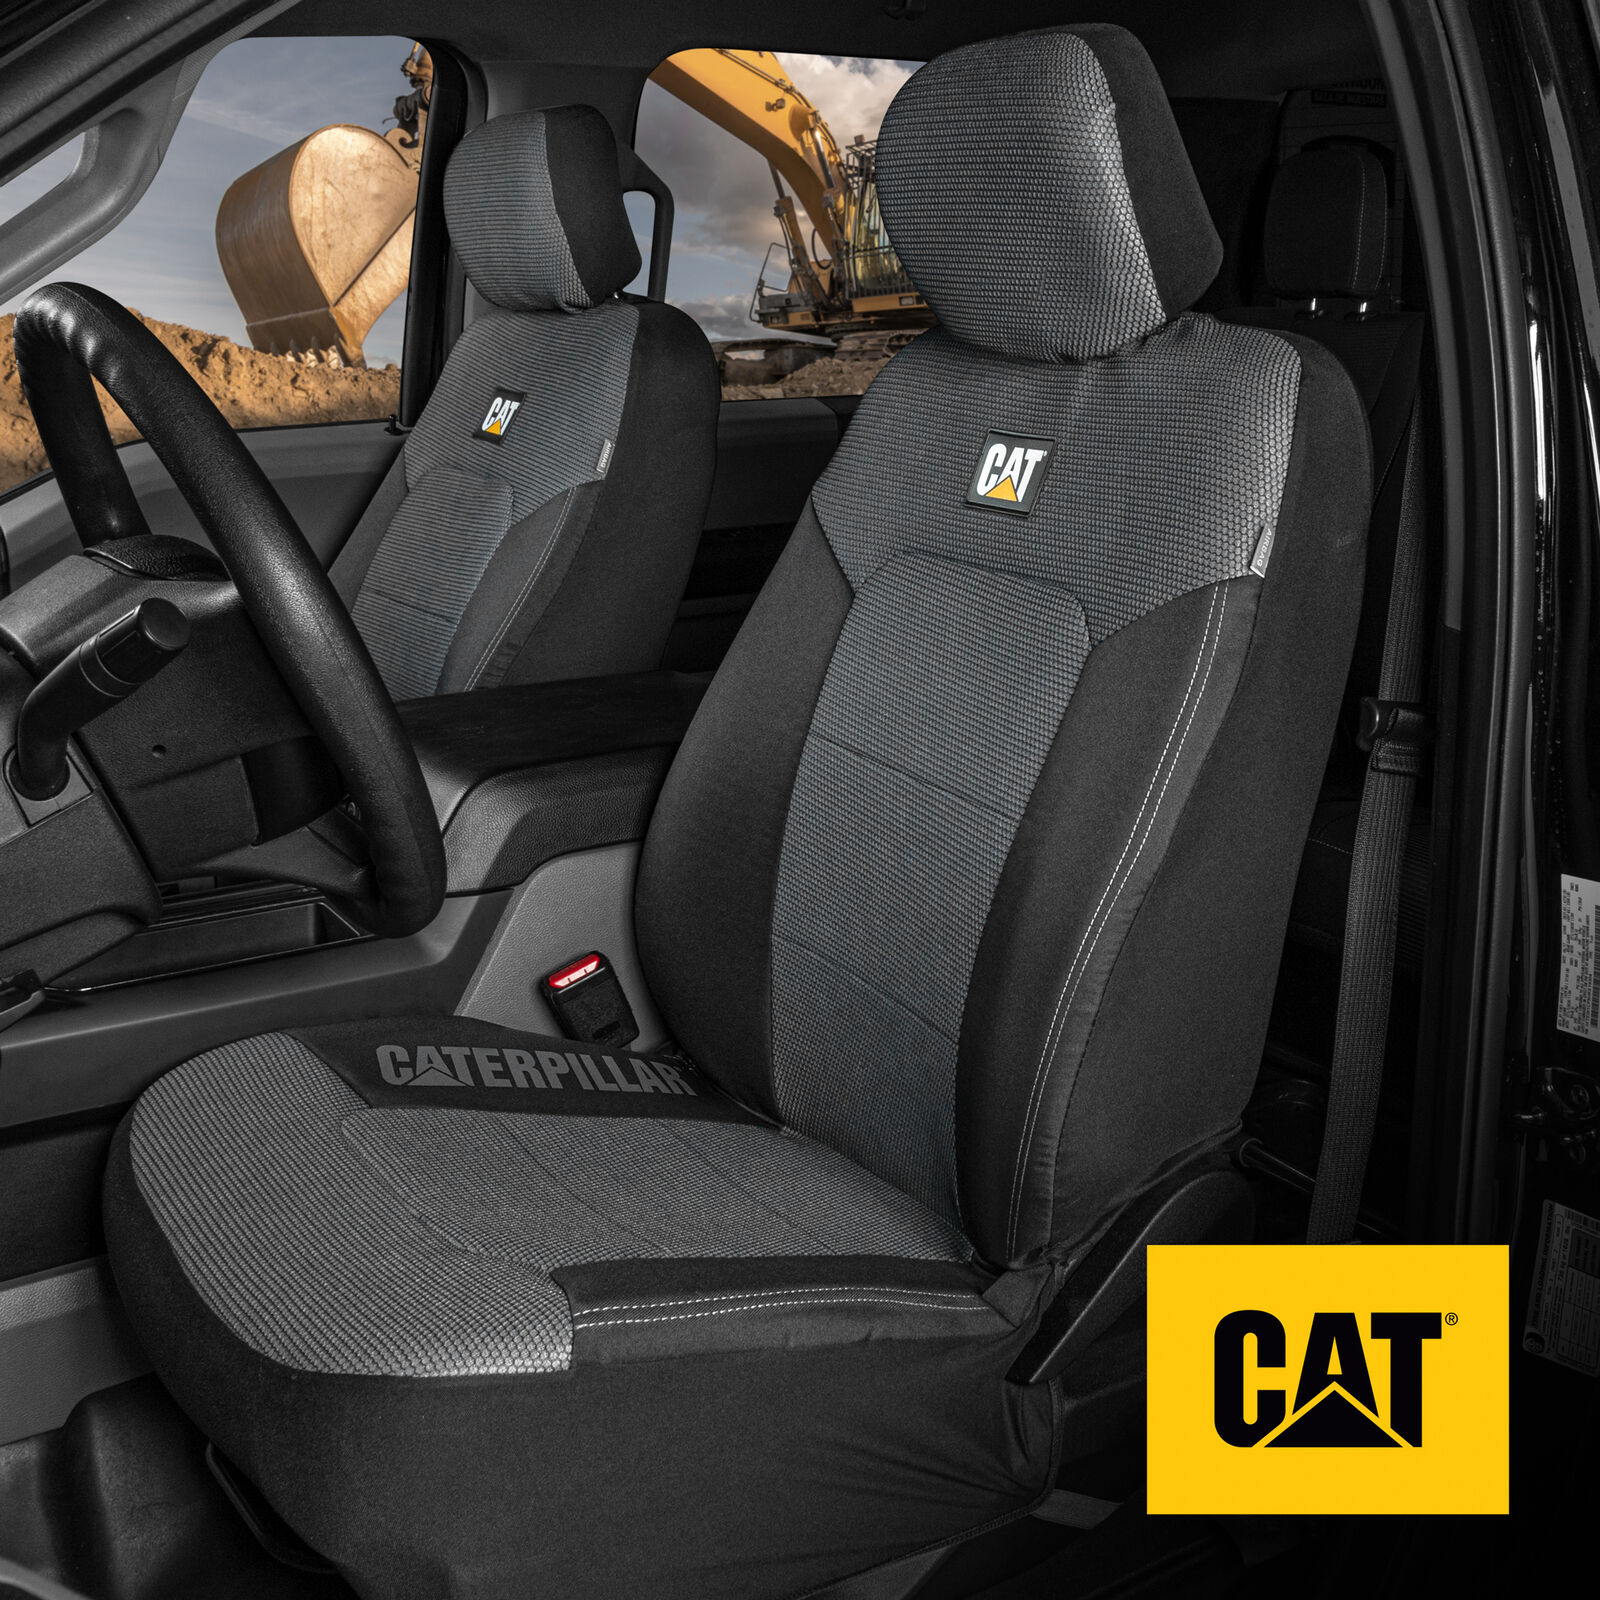 MeshFlex Front Seat Covers Set - CAT Black & Gray Truck SUV Van Car Seat Covers